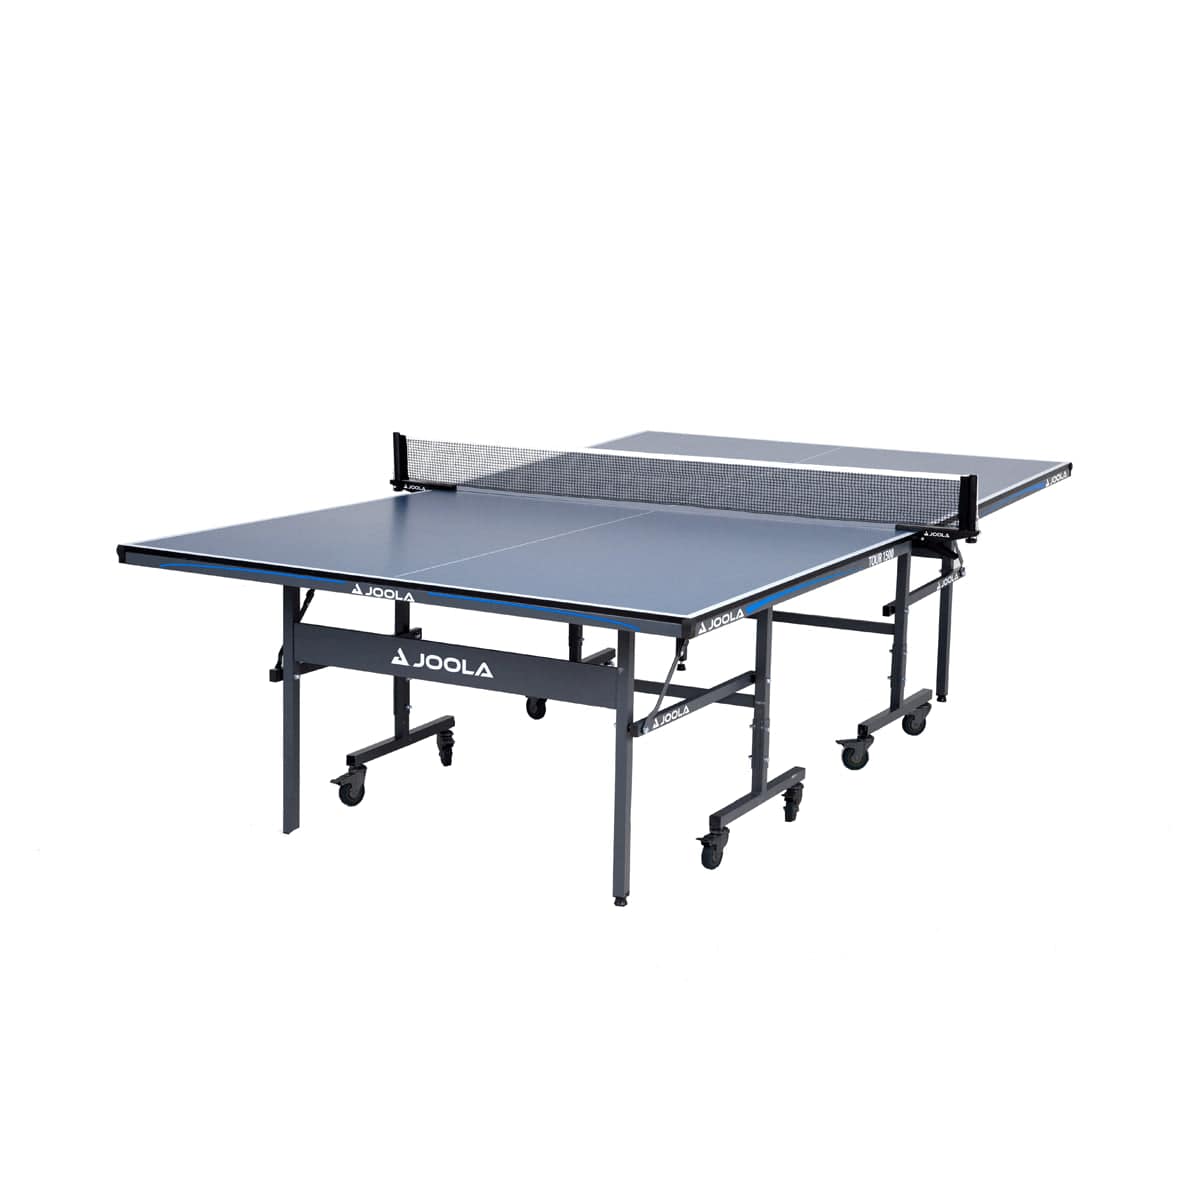 JOOLA TOUR 1500 Table Tennis Table (15mm) - Atomic Game Store